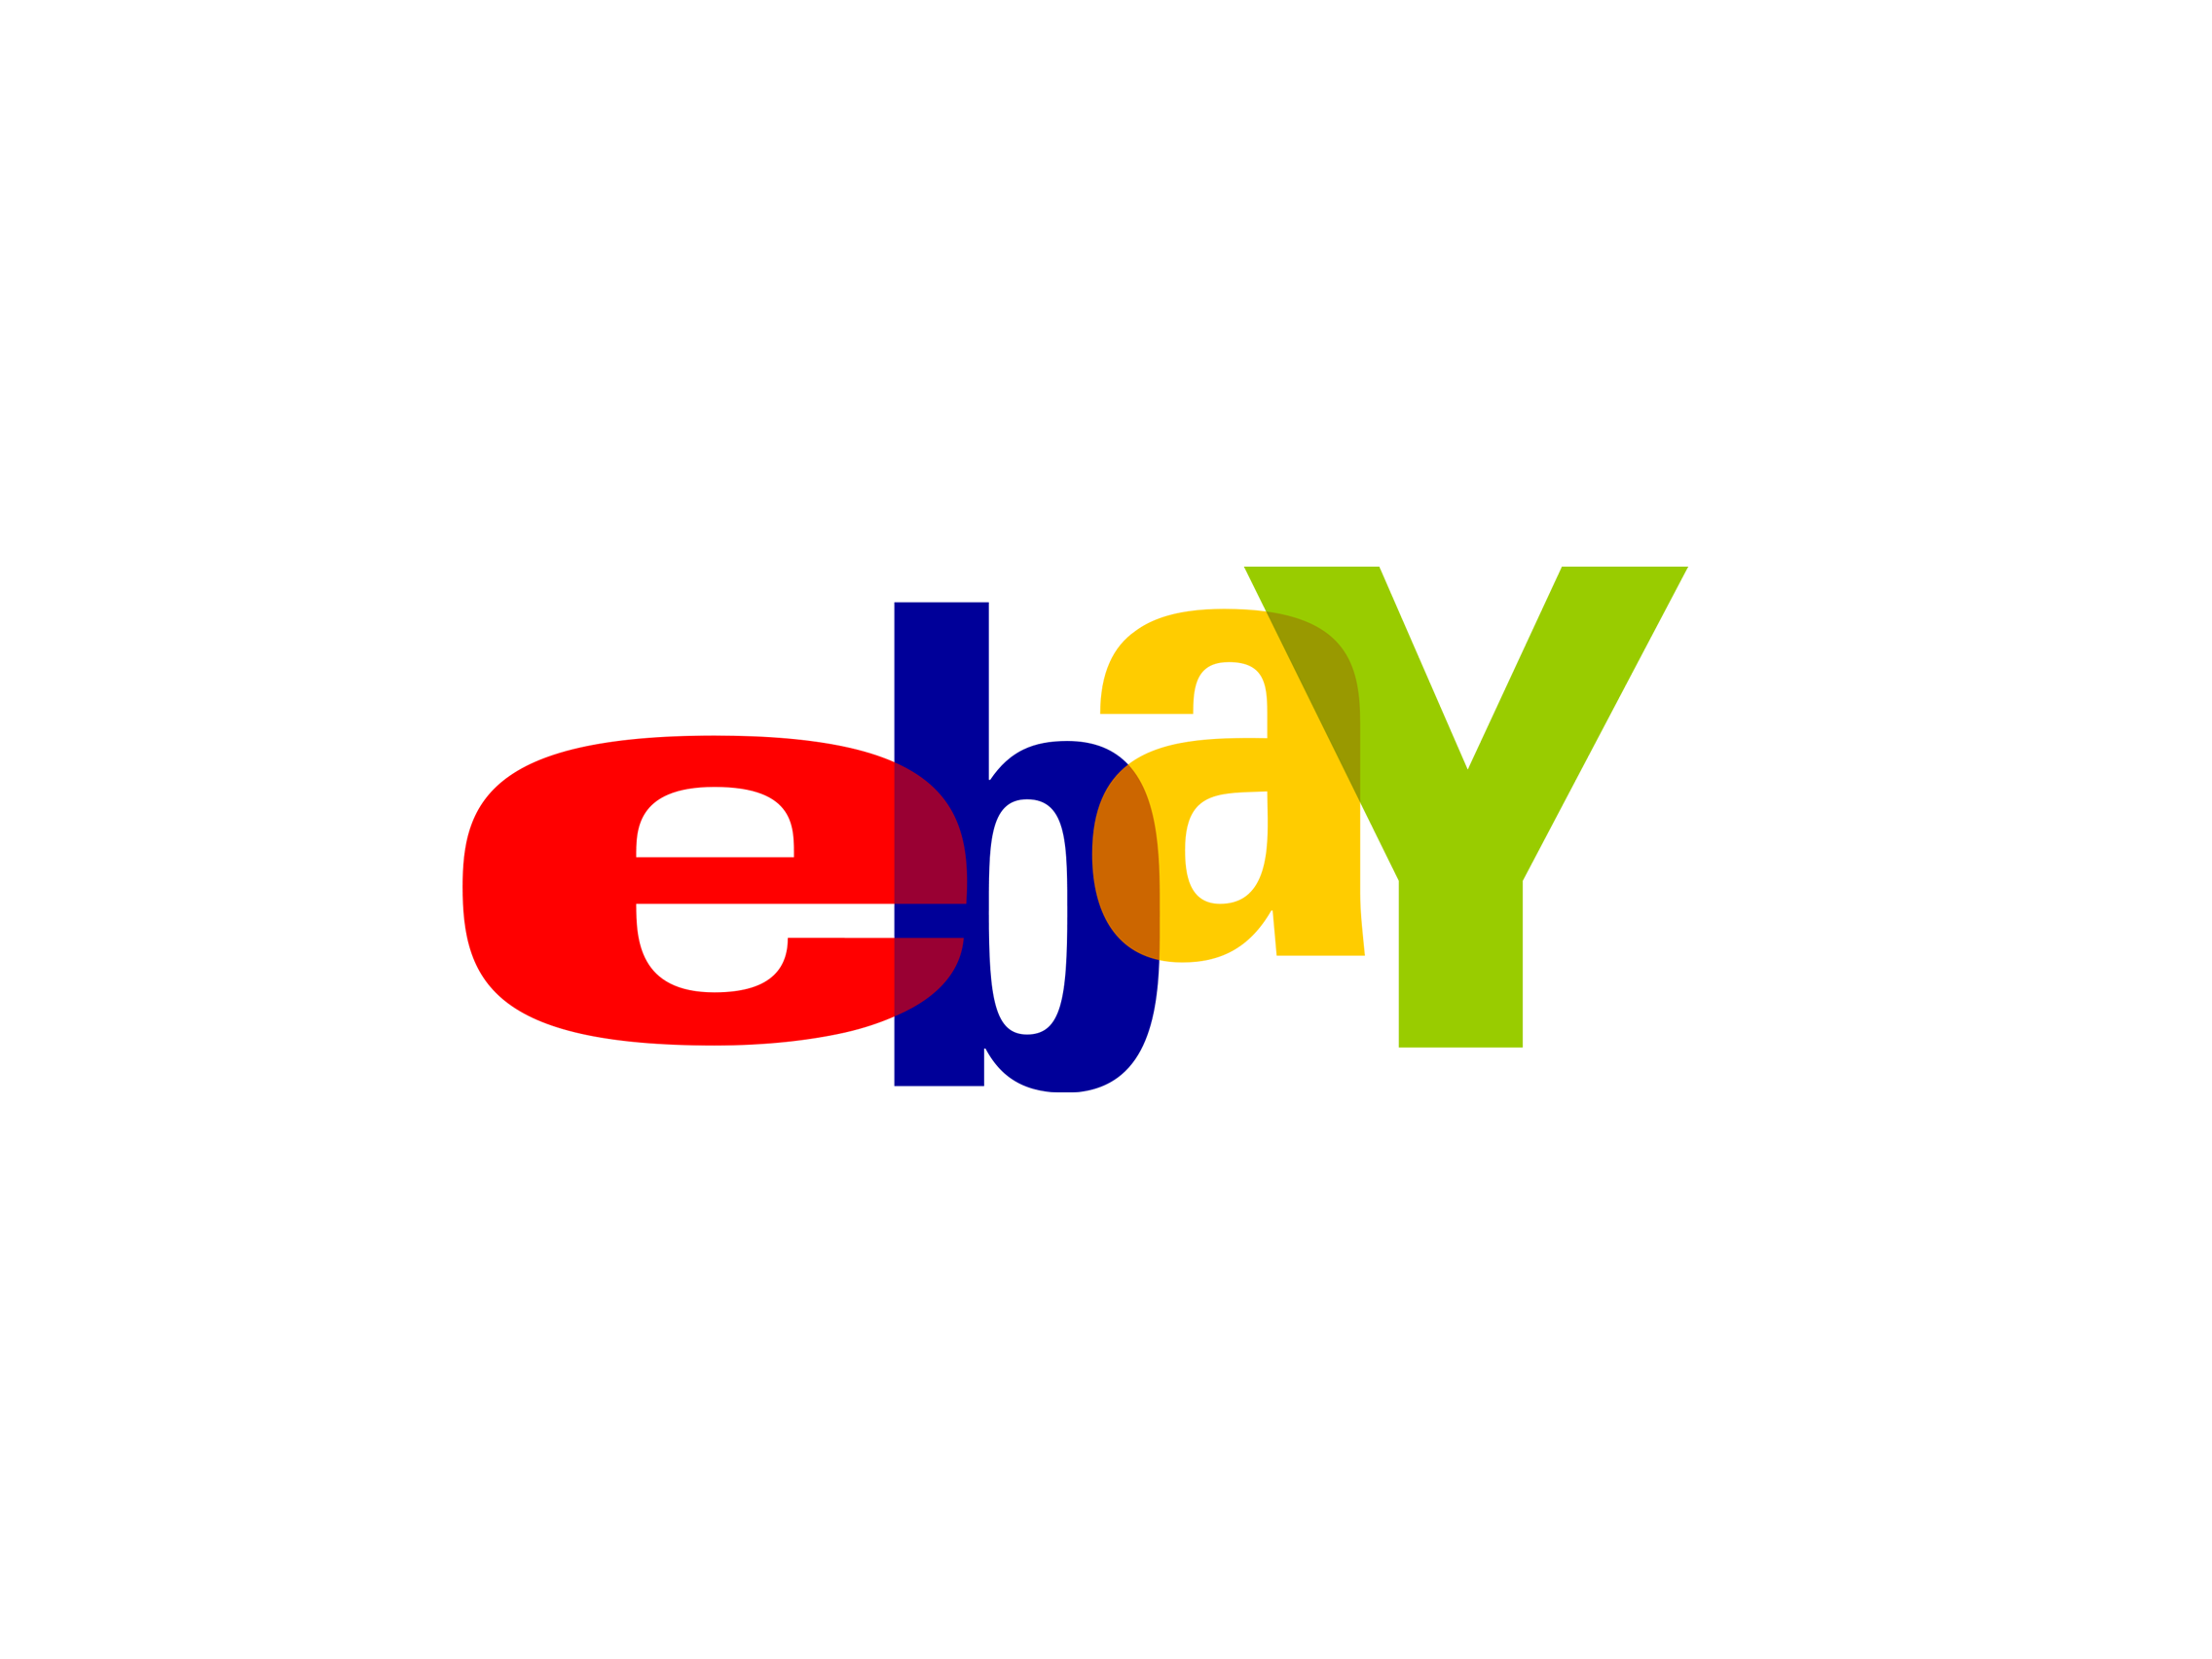 EBayのロゴ